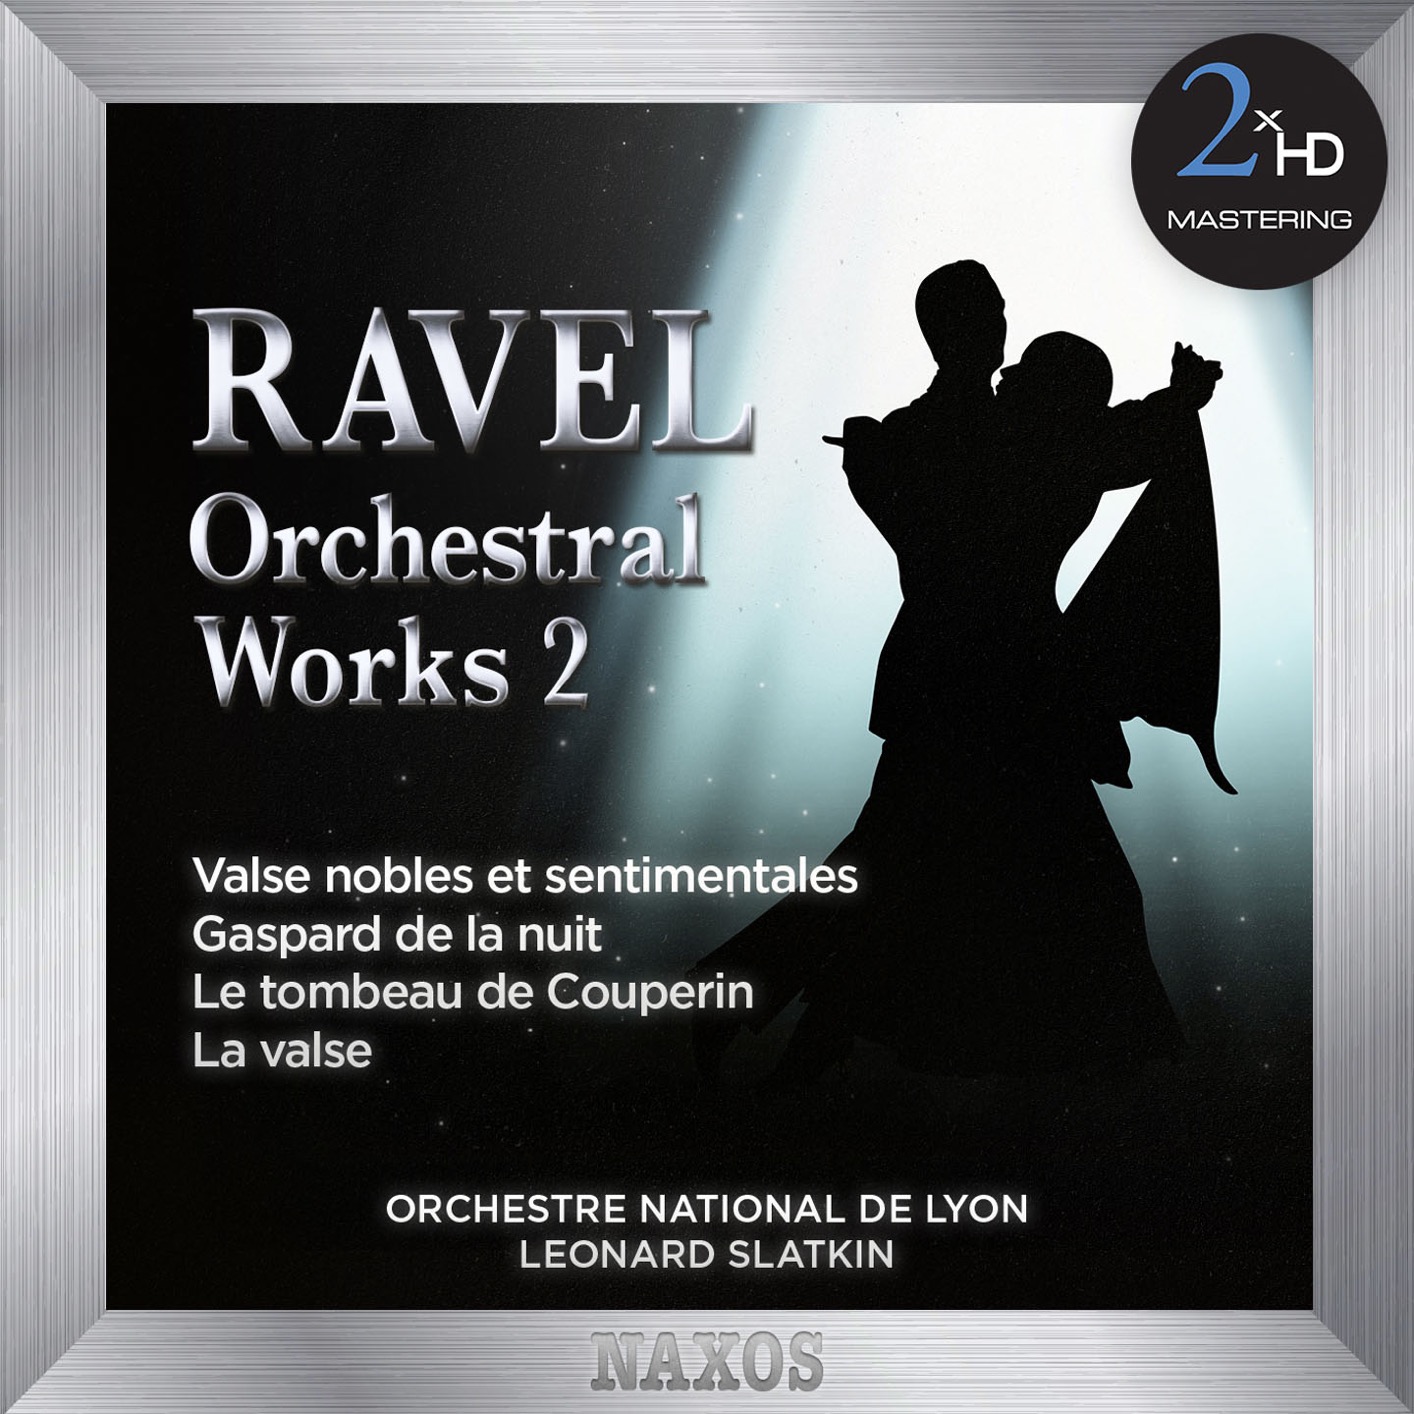 Lyon National Orchestra & Leonard Slatkin - Ravel: Orchestral Works, Vol. 2 (2013/2015) [FLAC 24bit/192kHz]